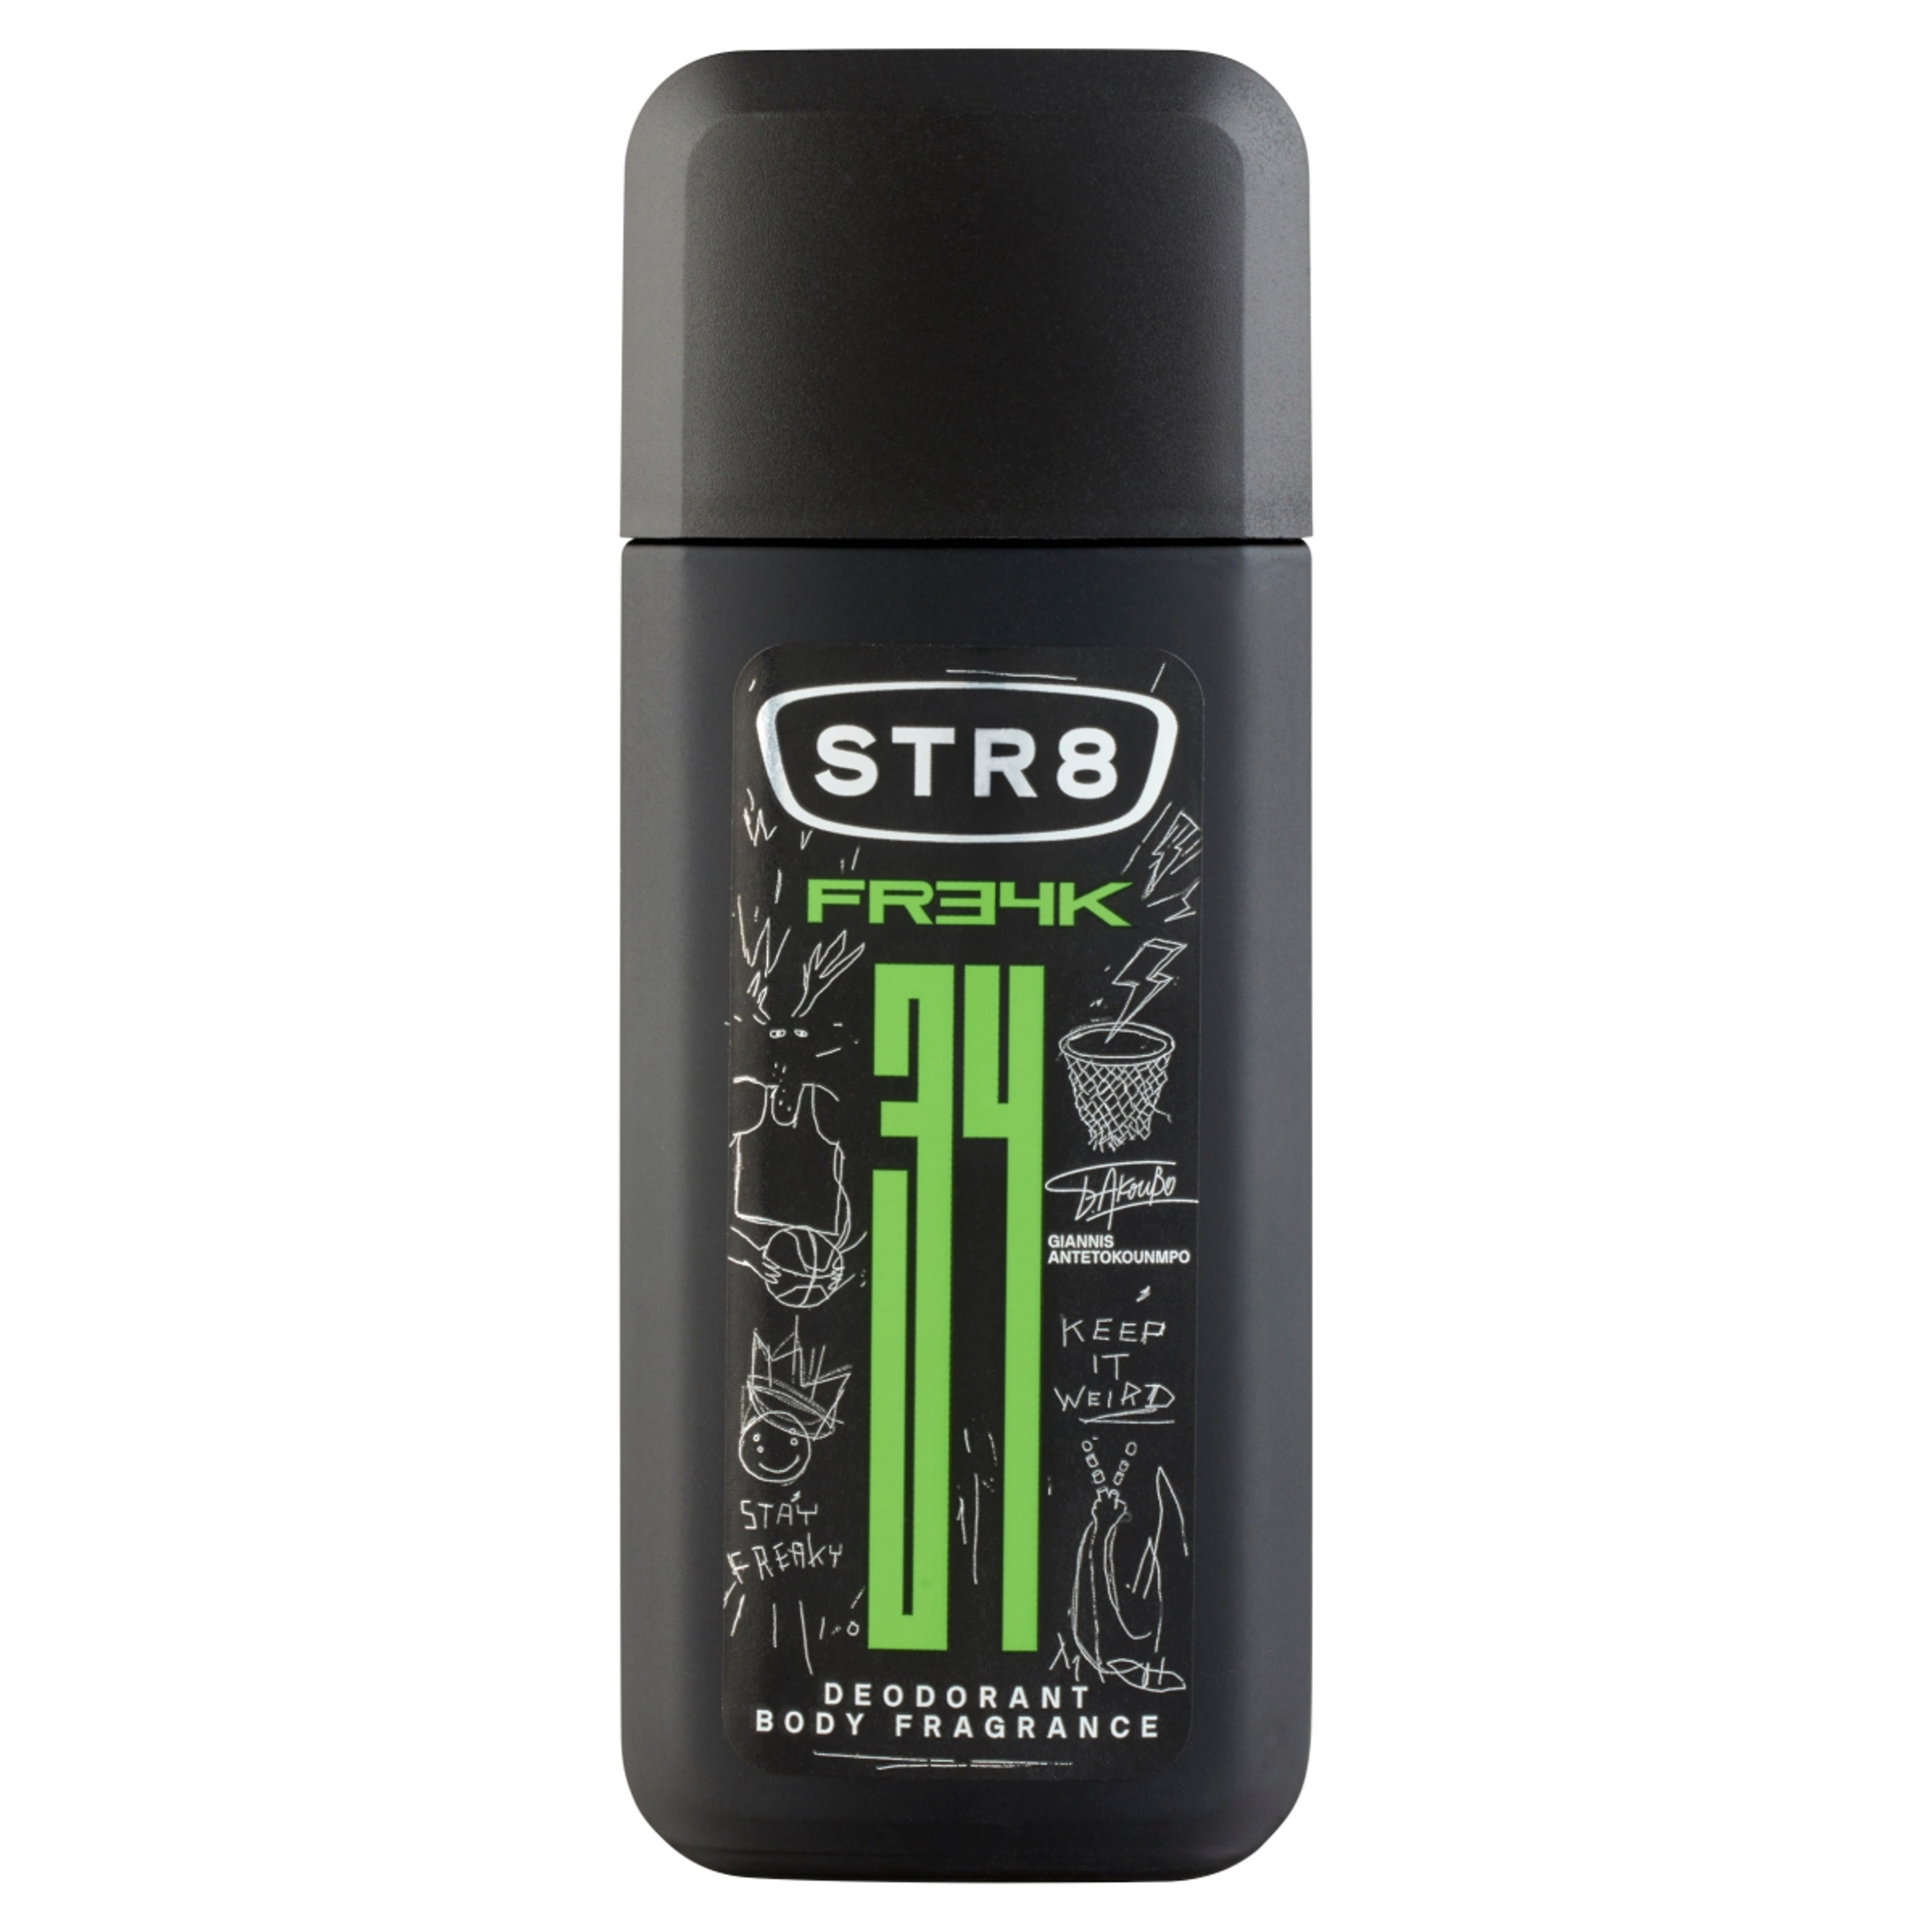 STR8 FR34K férfi body fragrance - 75 ml-1